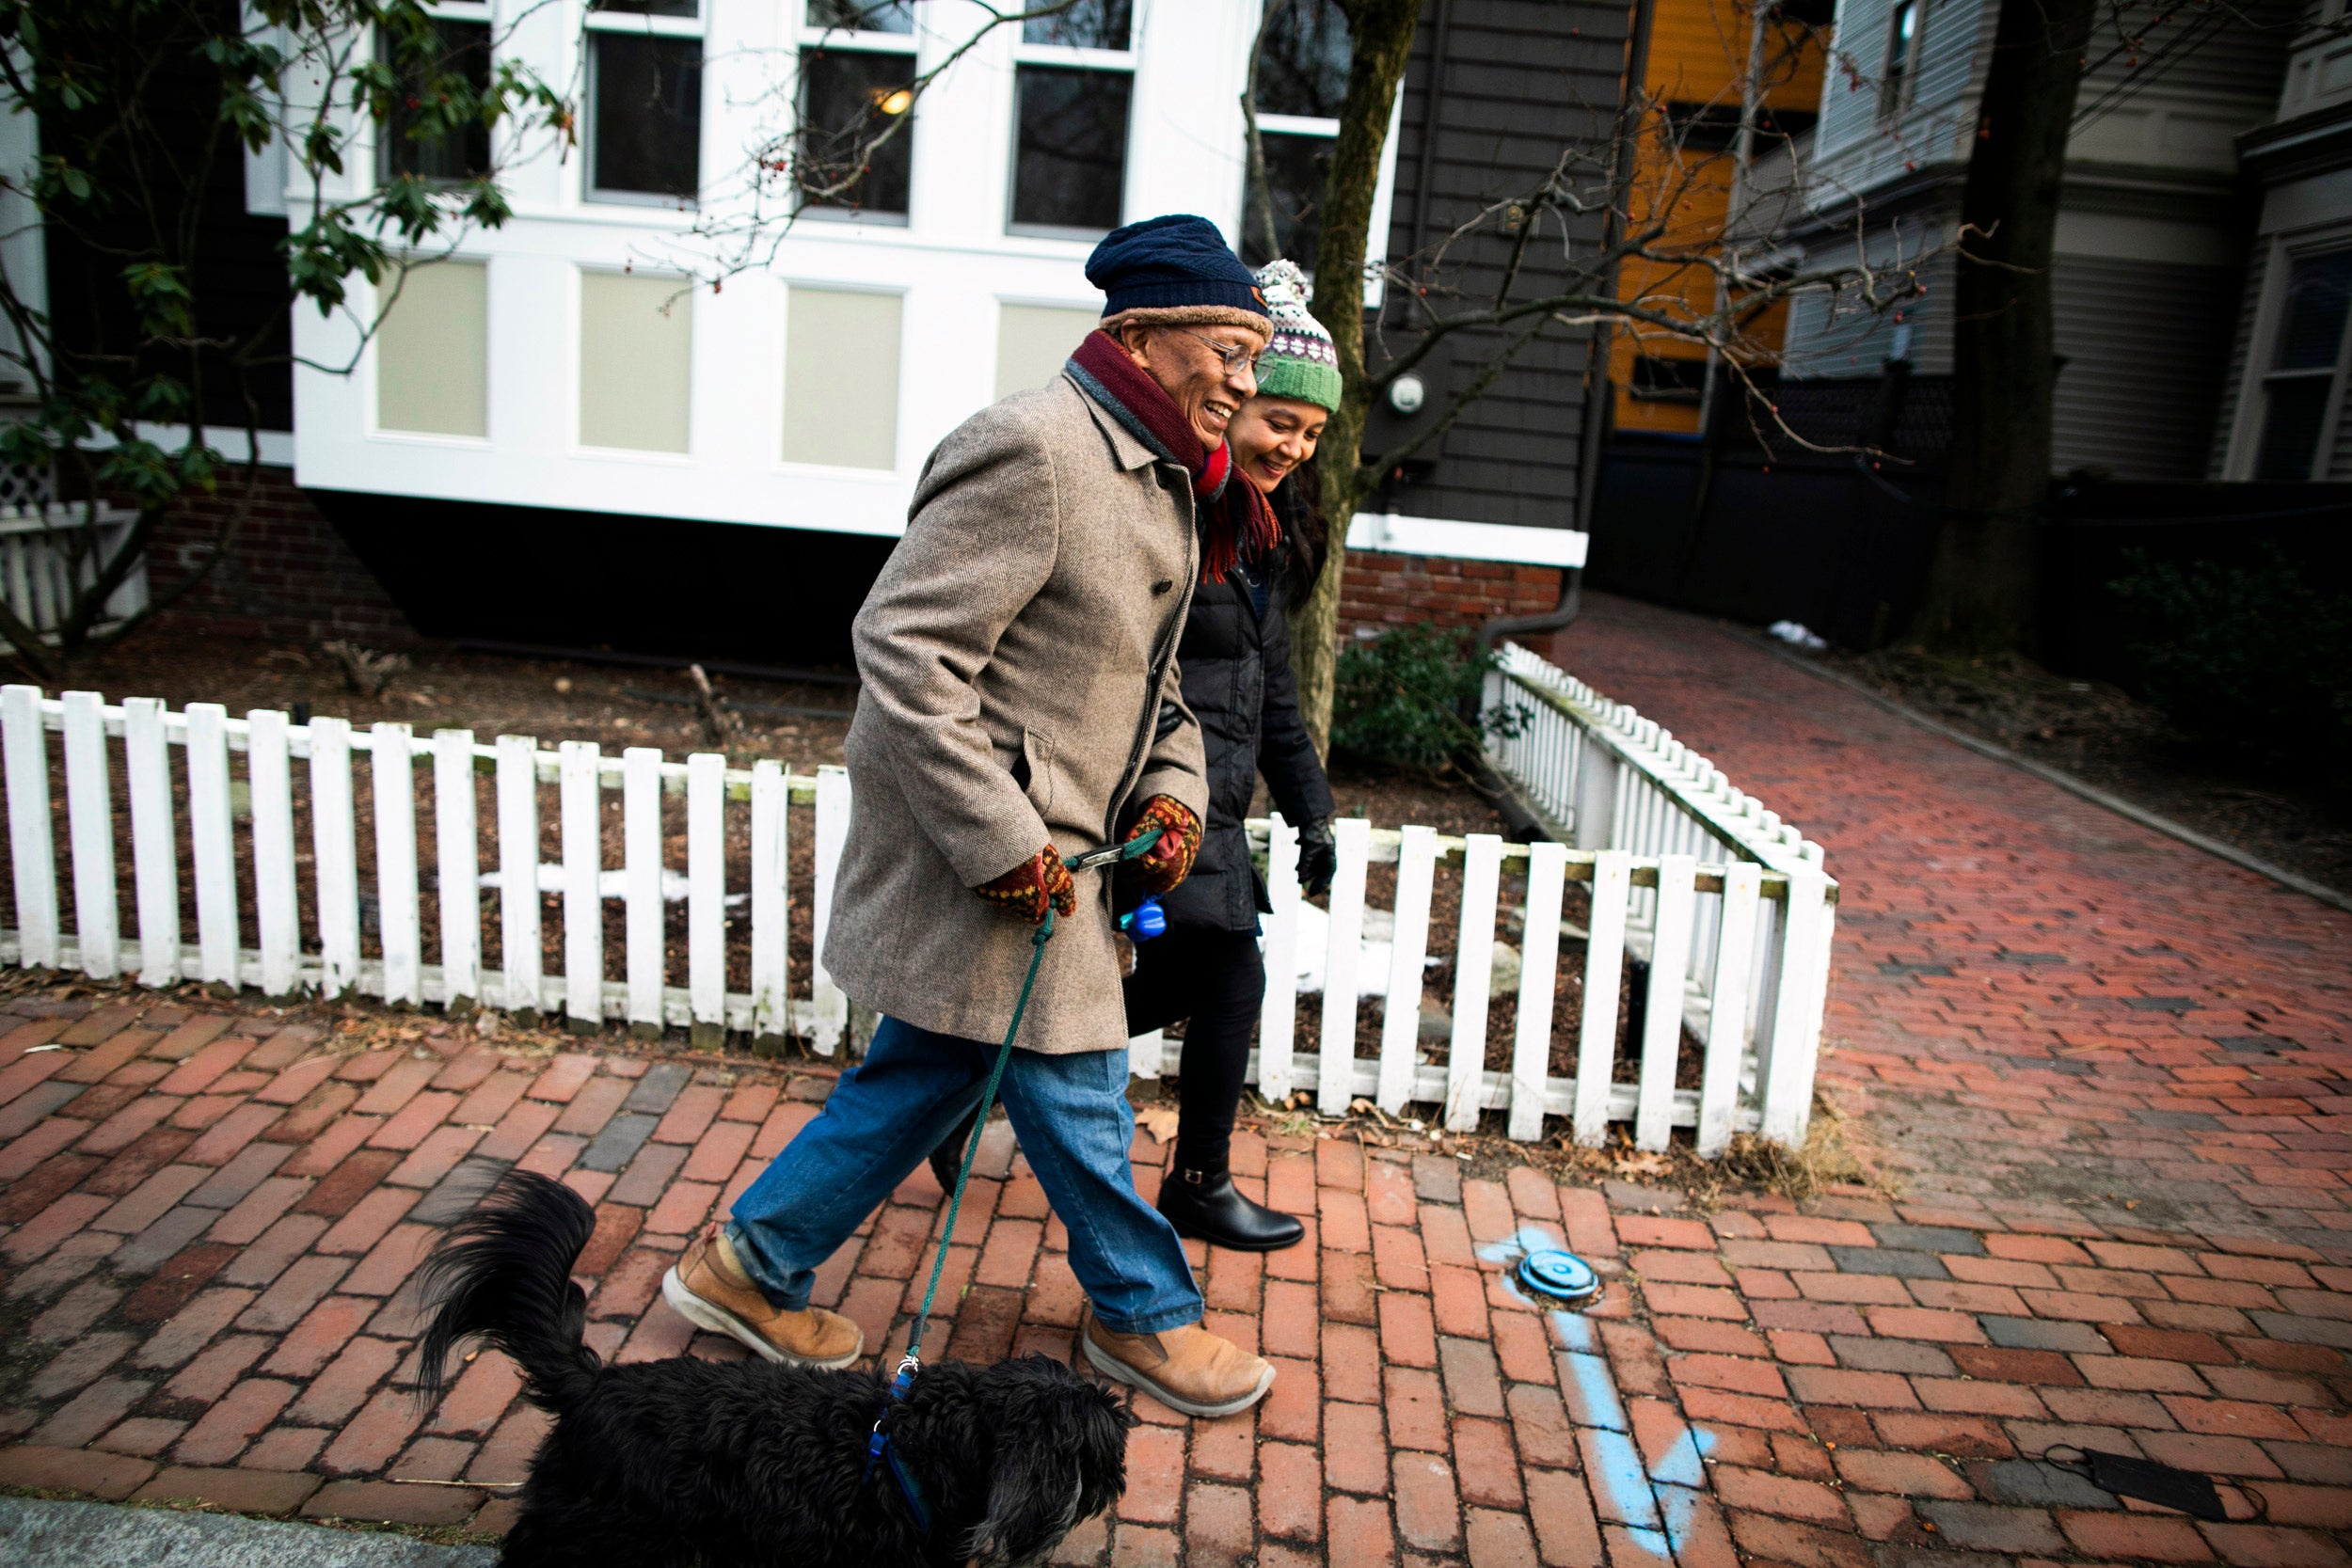 Orlando Patterson and wife Anita Goldman walk dog.